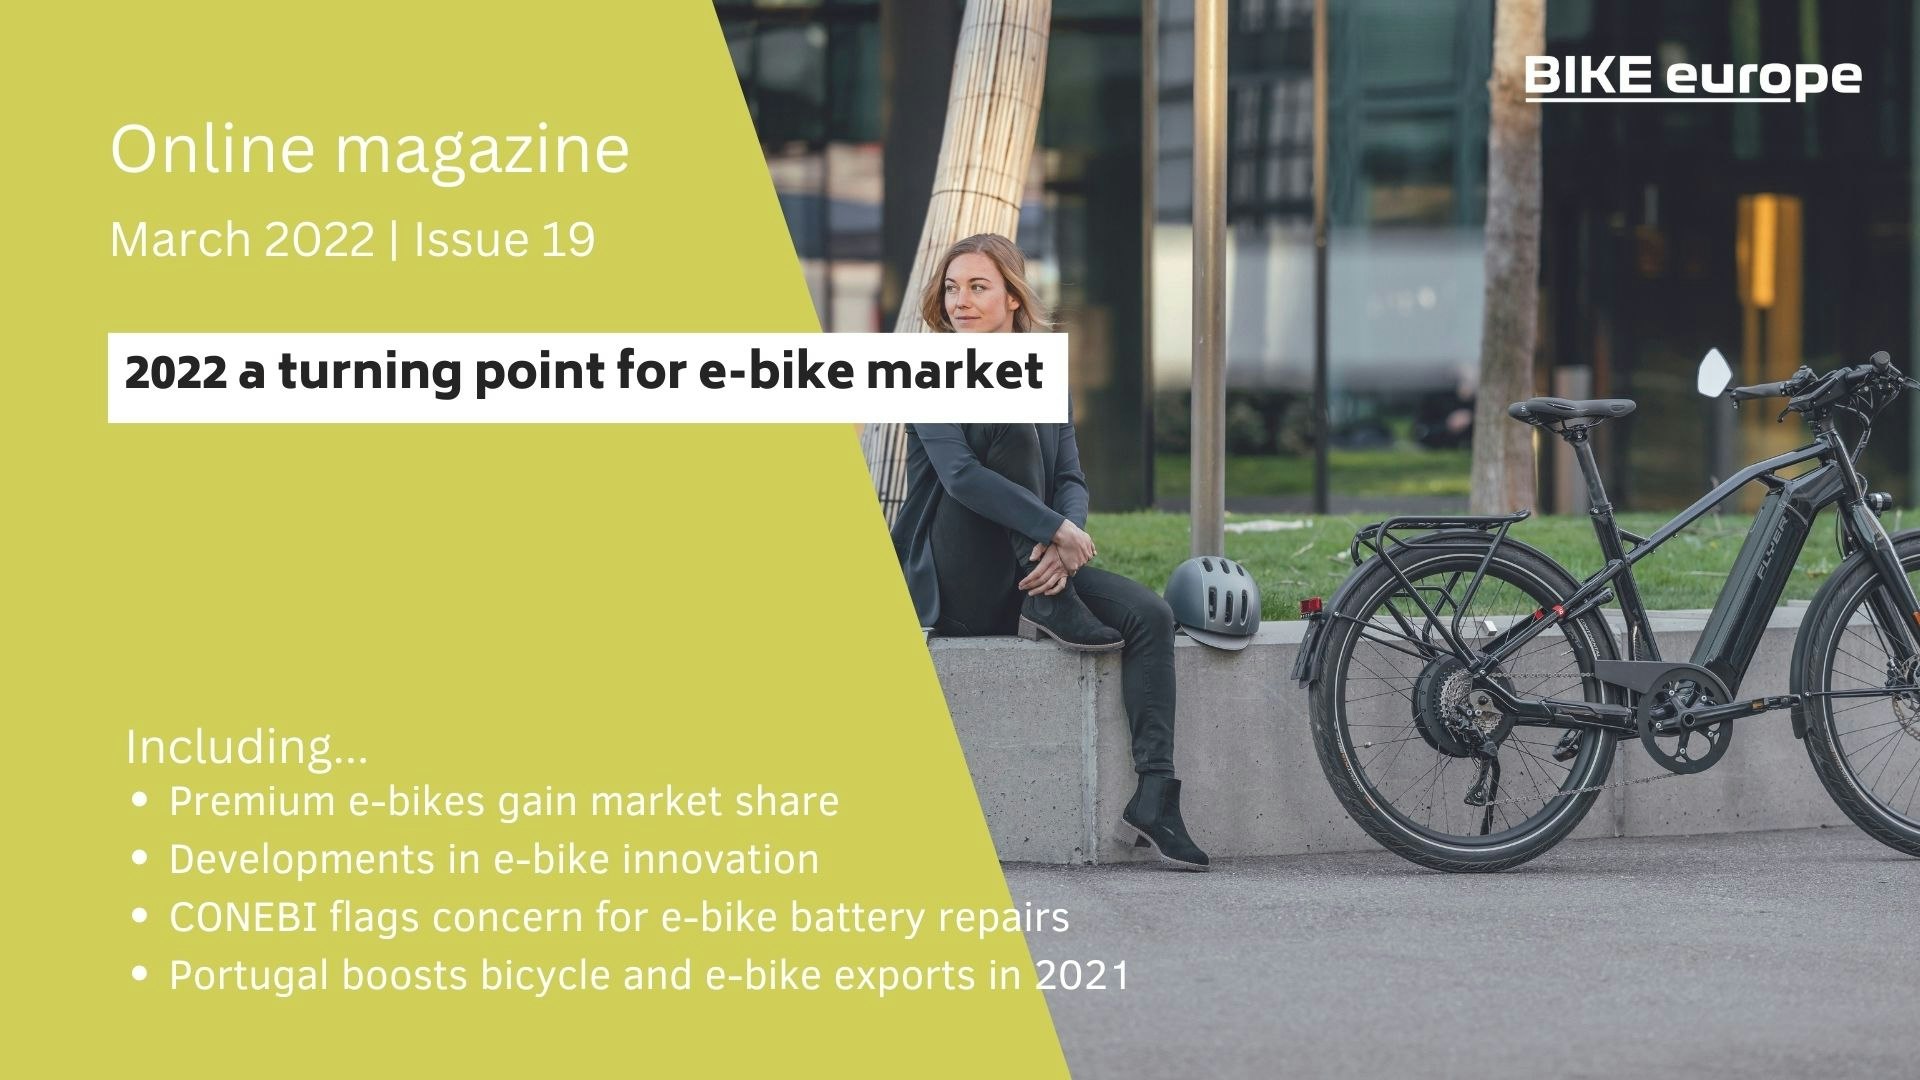 Online Magazine 2022 a turning point for e-bike market